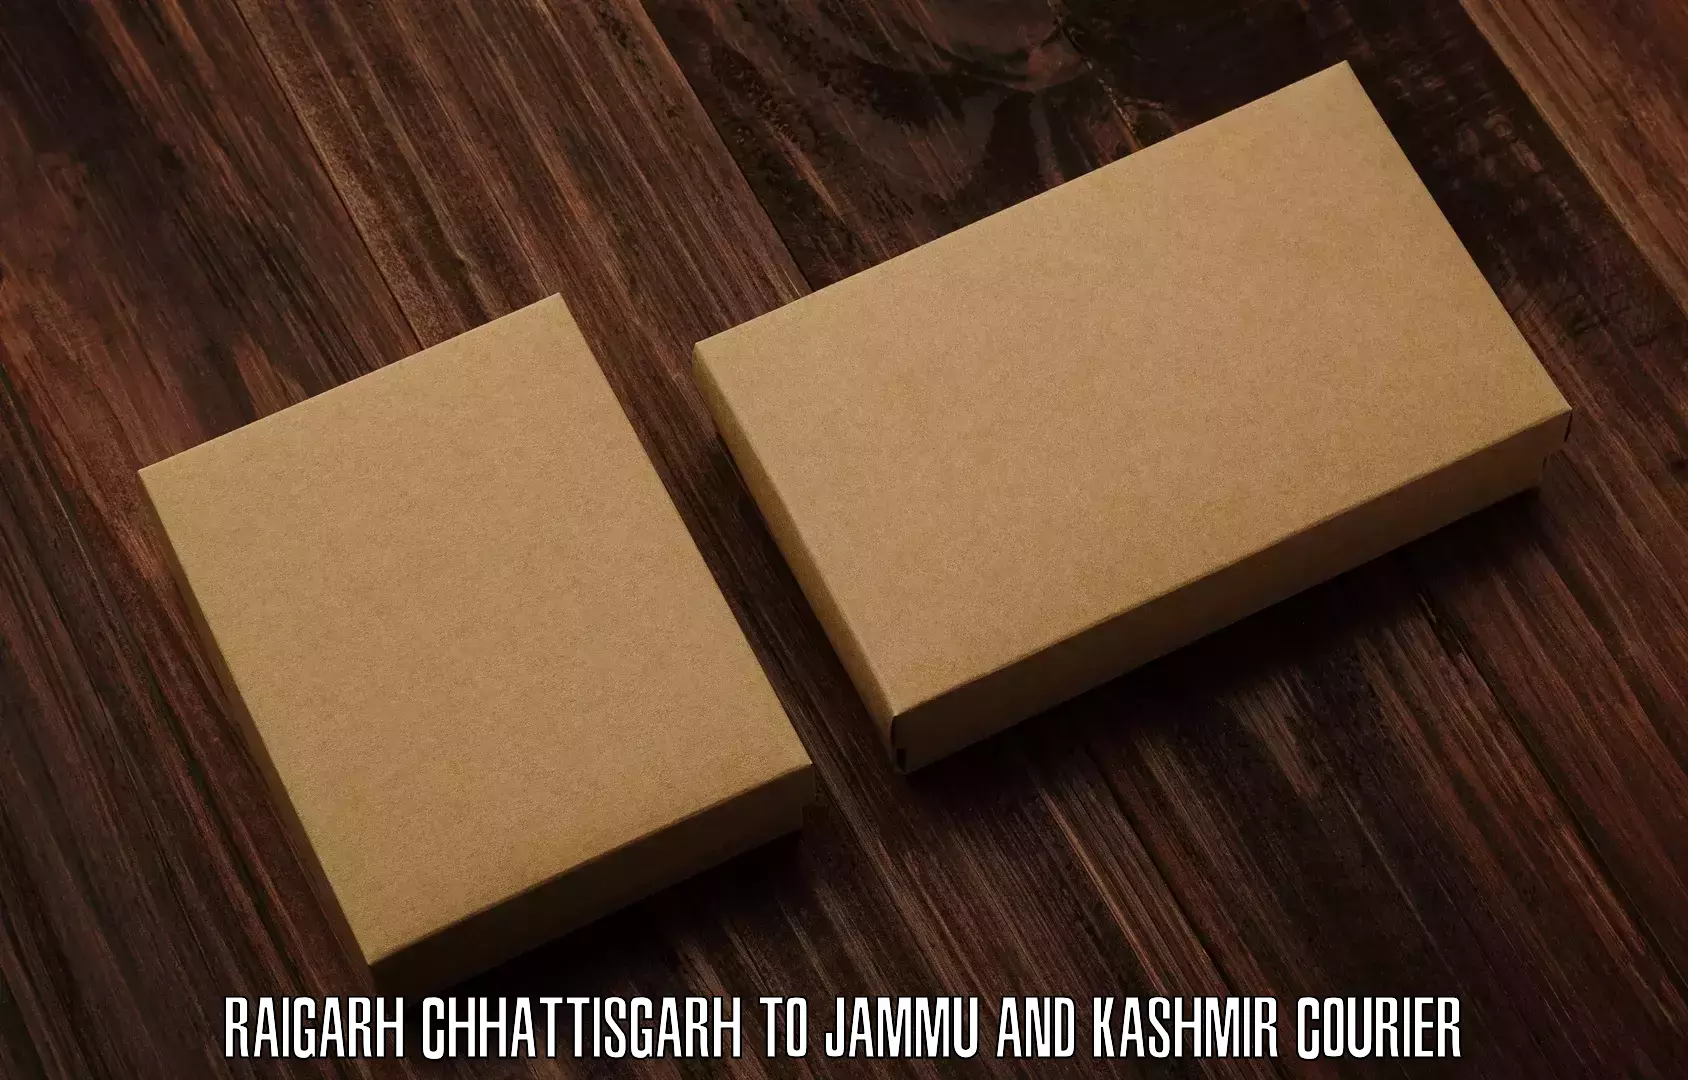 Streamlined delivery processes Raigarh Chhattisgarh to Kishtwar